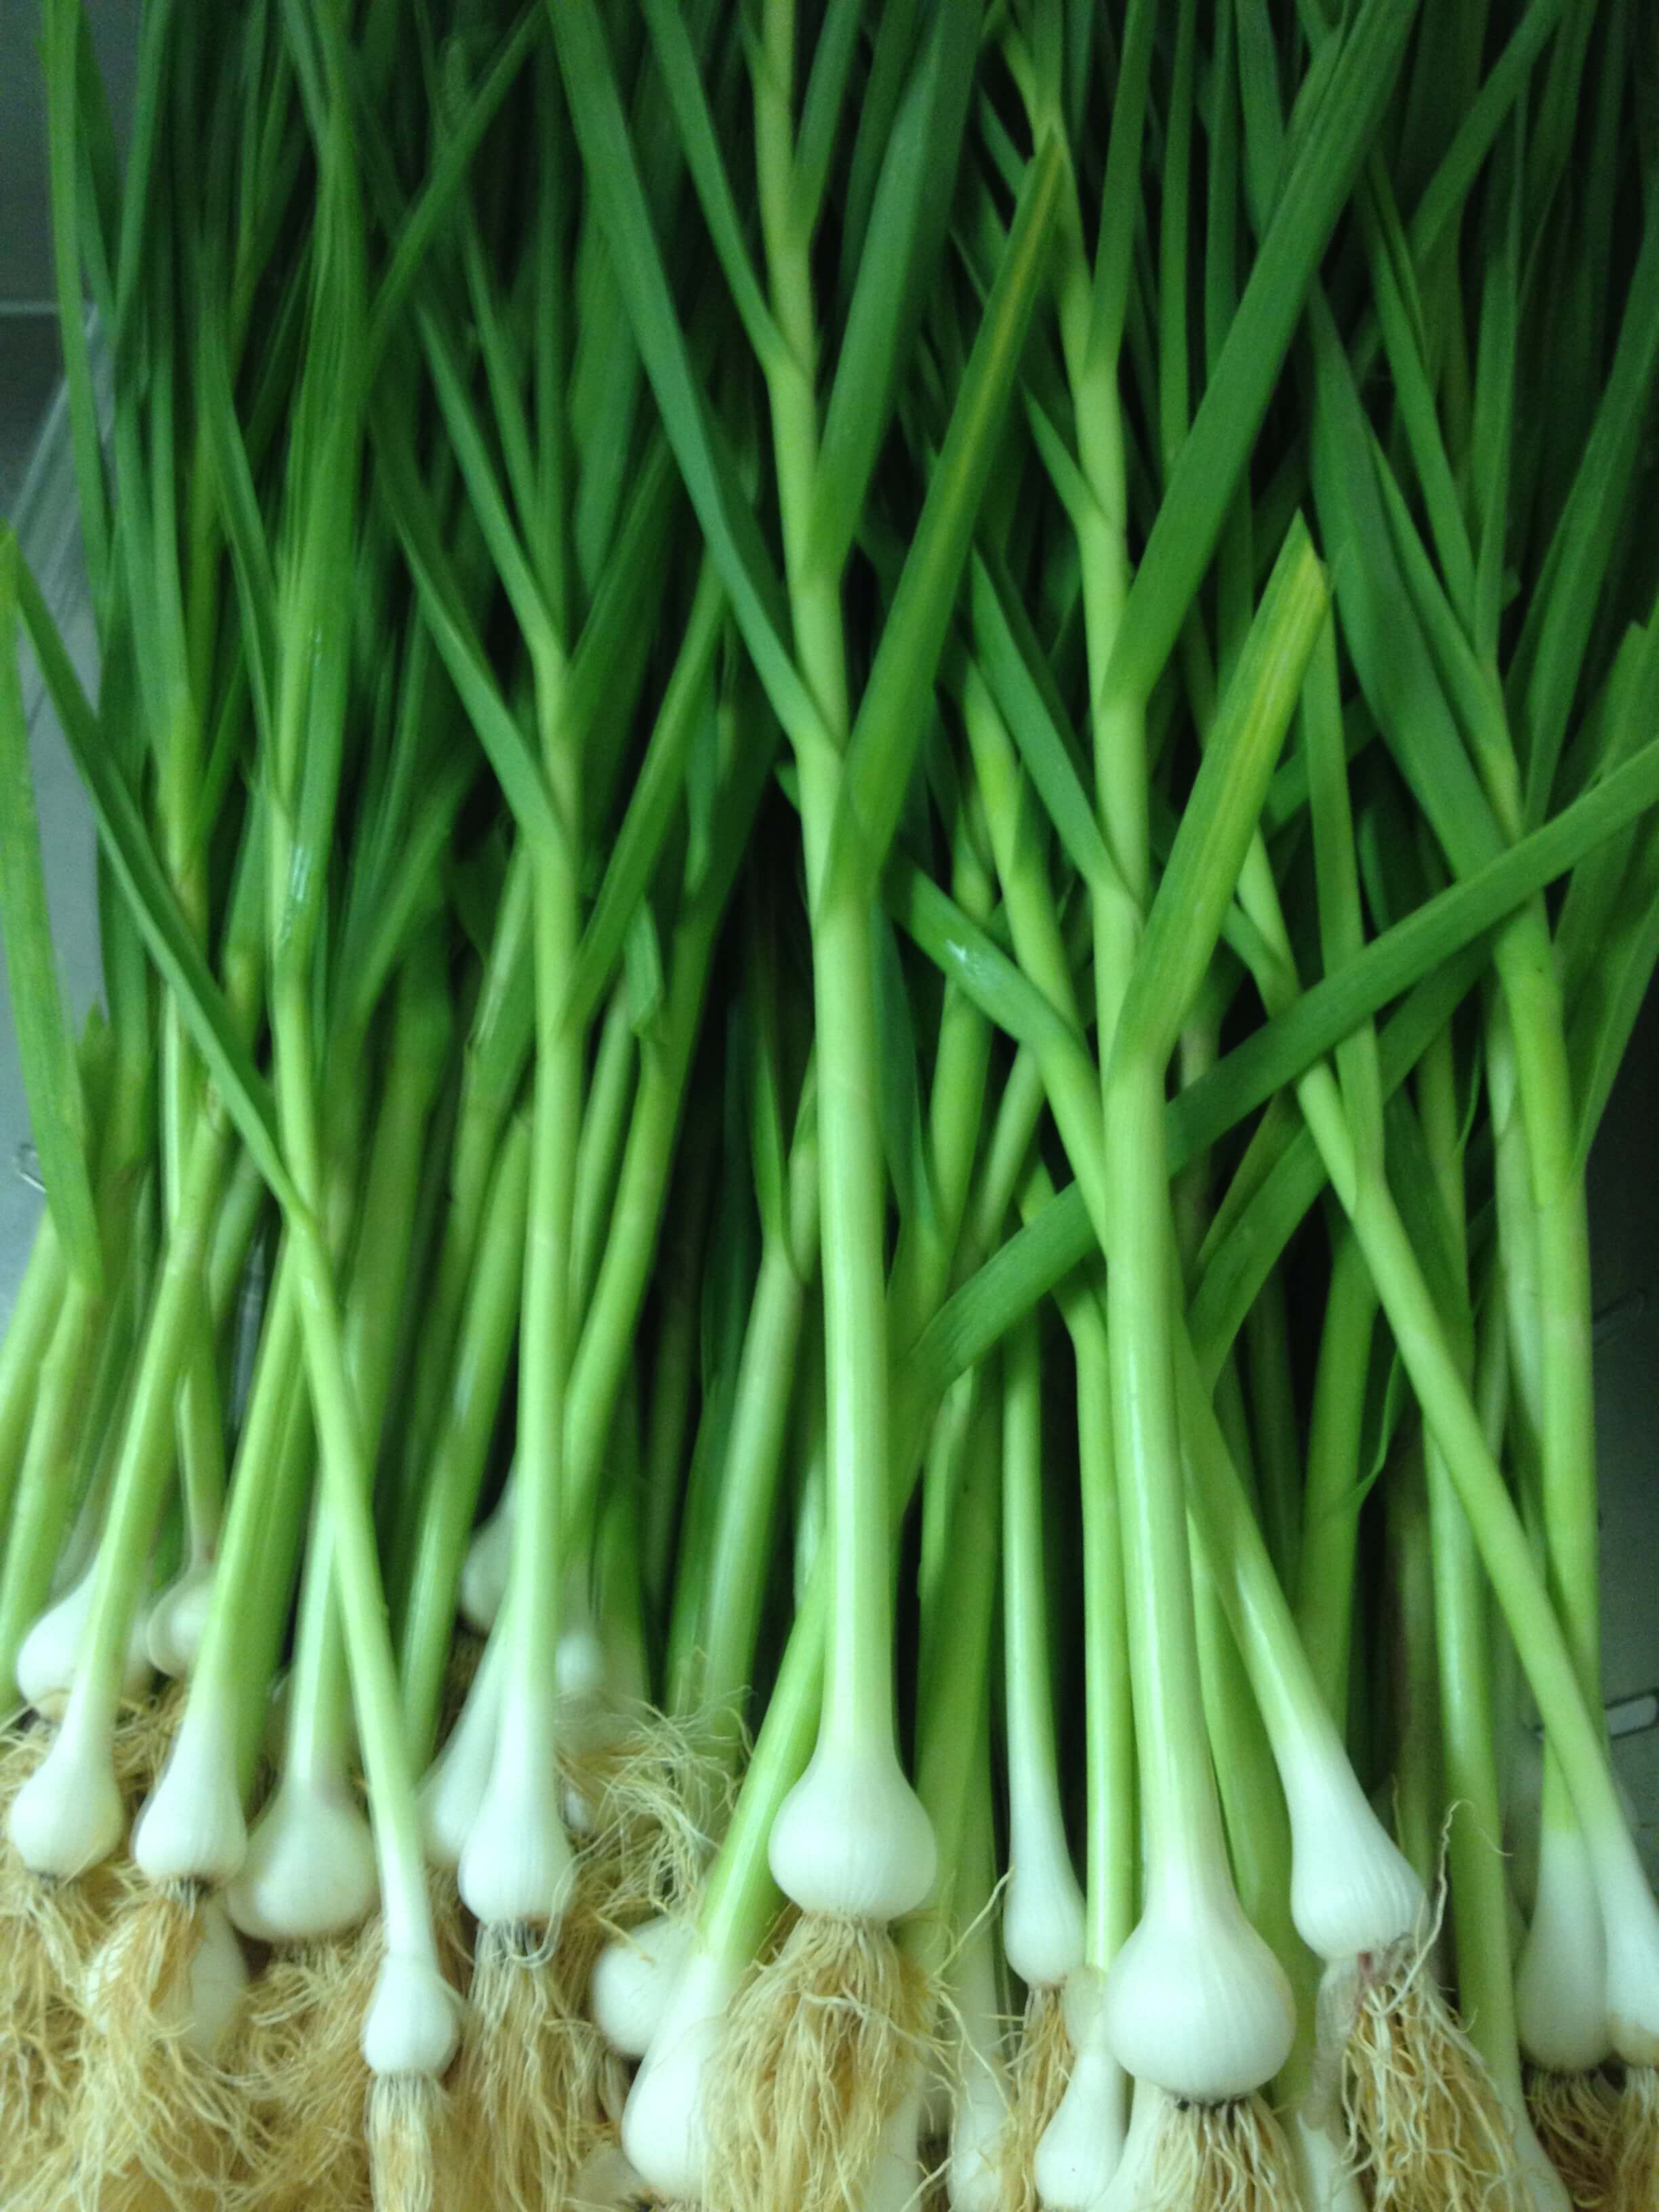 https://wholeearthharvest.com/wp-content/uploads/2019/03/green-garlic.jpg